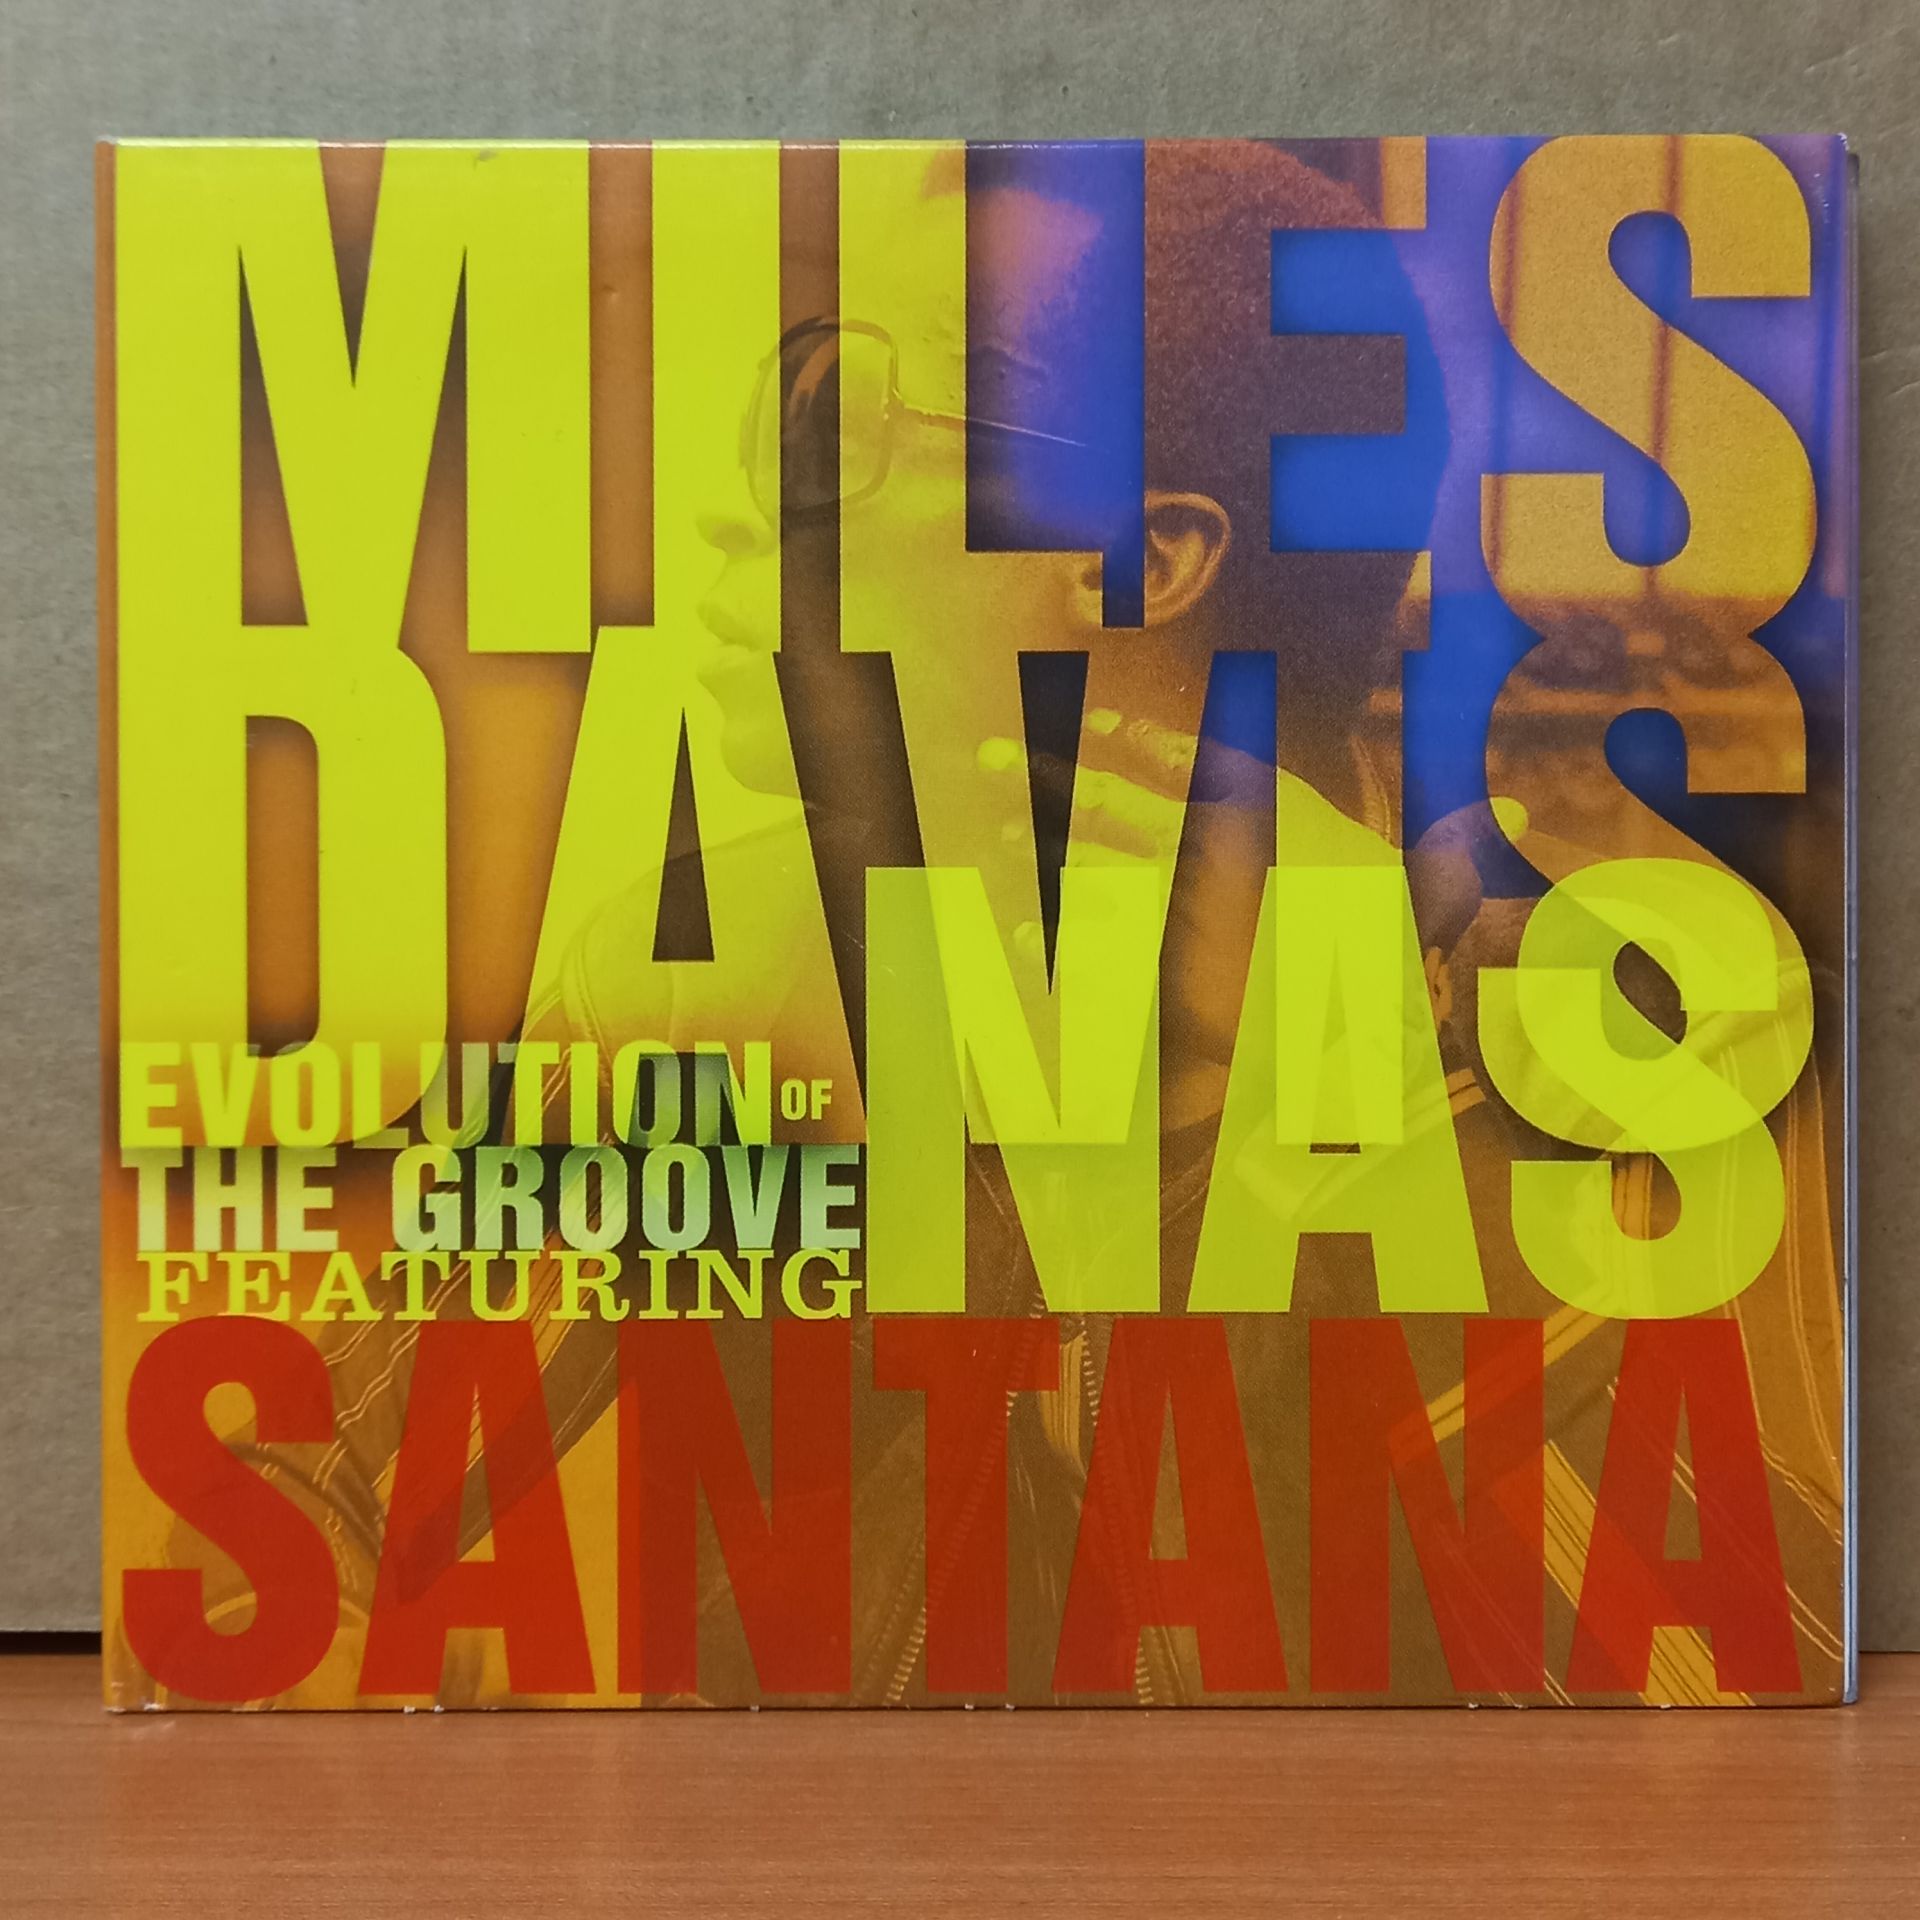 MILES DAVIS - EVOLUTION OF THE GROOVE / FEATURING SANTANA (2007) - CD 2.EL